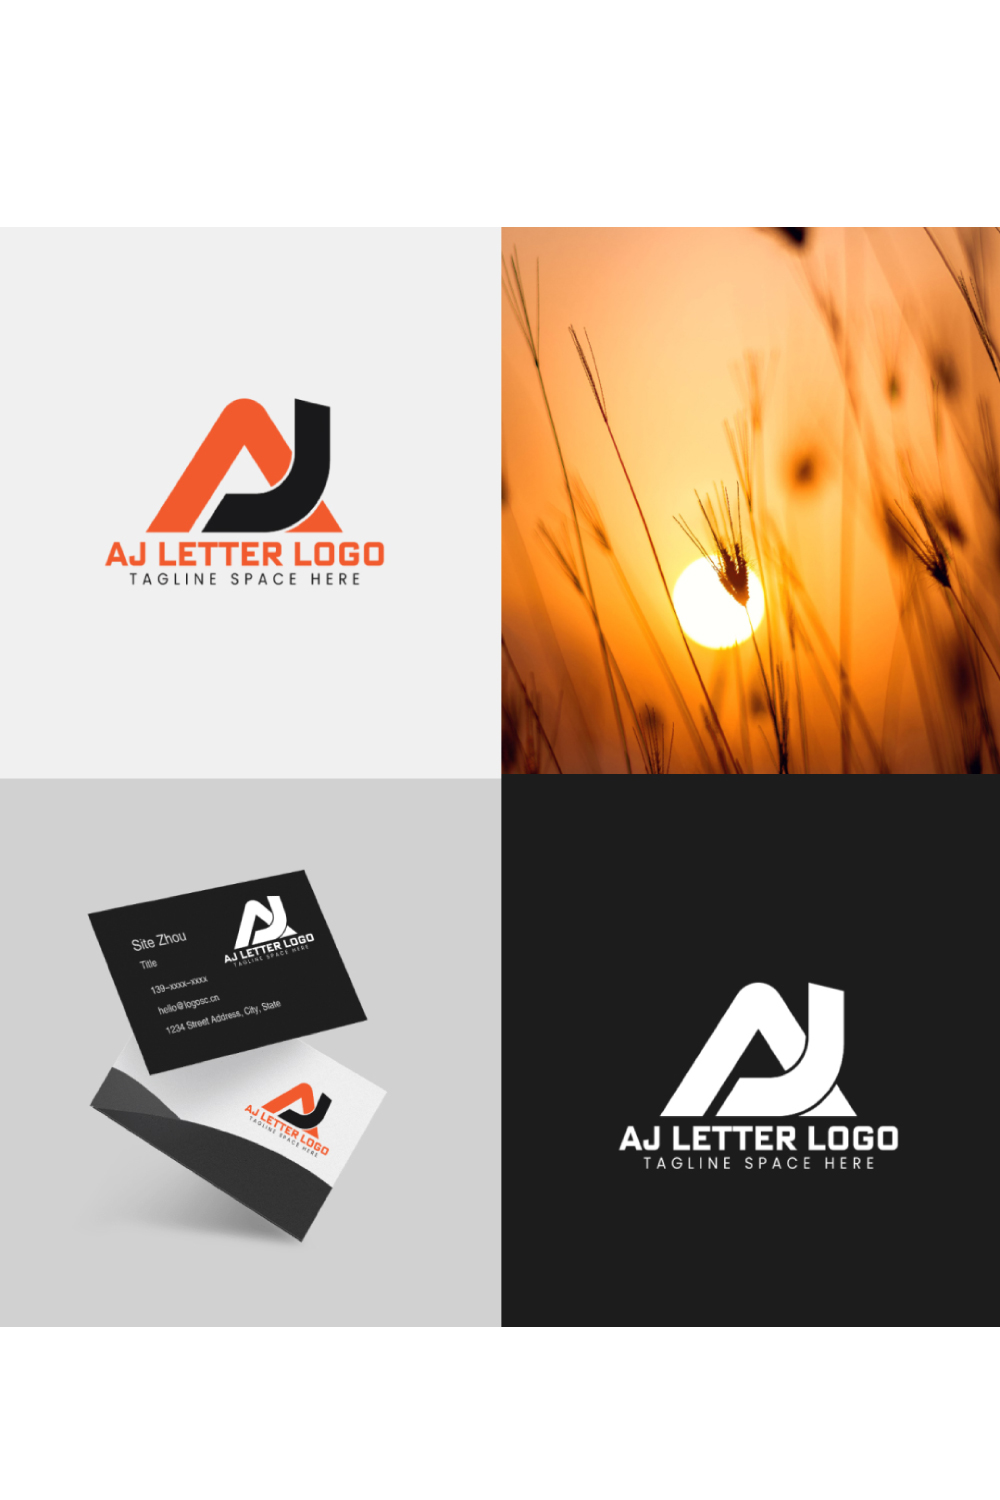 AJ Letter Logo Template pinterest preview image.